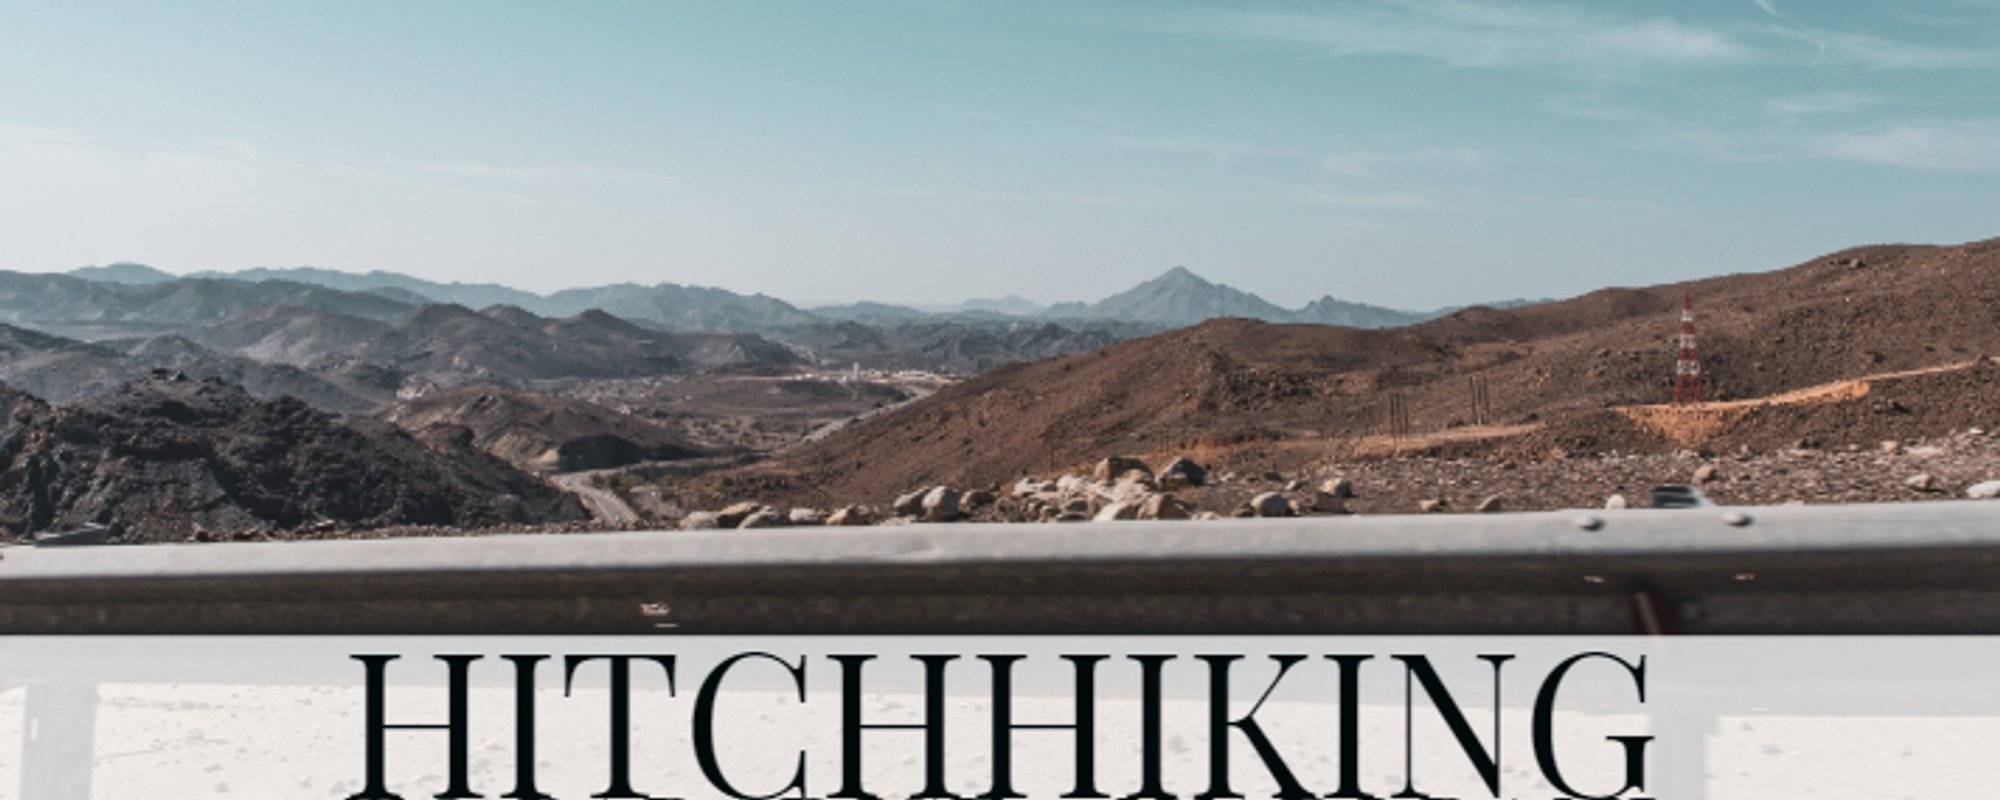 Hitchhiking to paradise - Wadi Bani Khalid, Oman